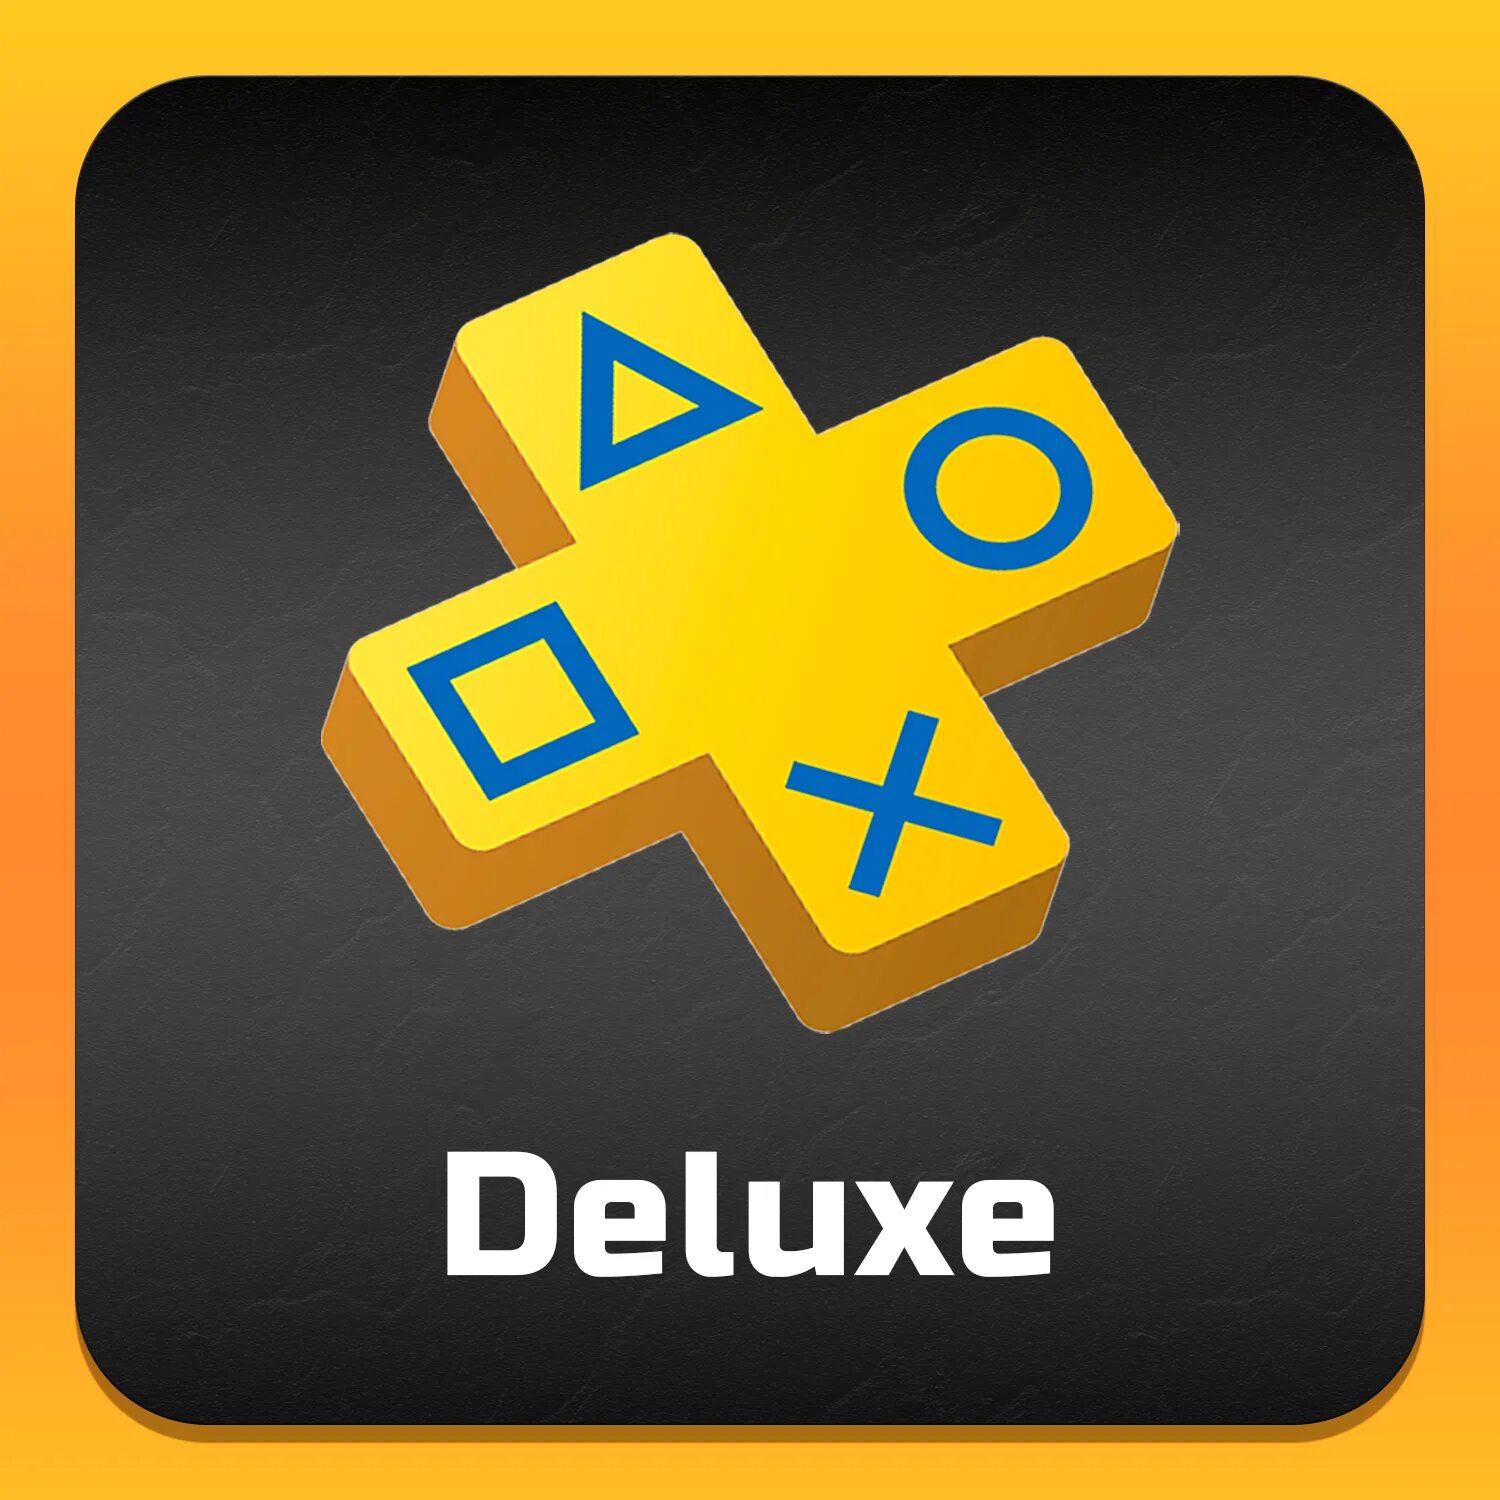 Игры в подписке deluxe ps5. PLAYSTATION Plus Deluxe. PLAYSTATION Plus Deluxe Turkey. PLAYSTATION Plus Extra. Extra PS Plus 12 months.